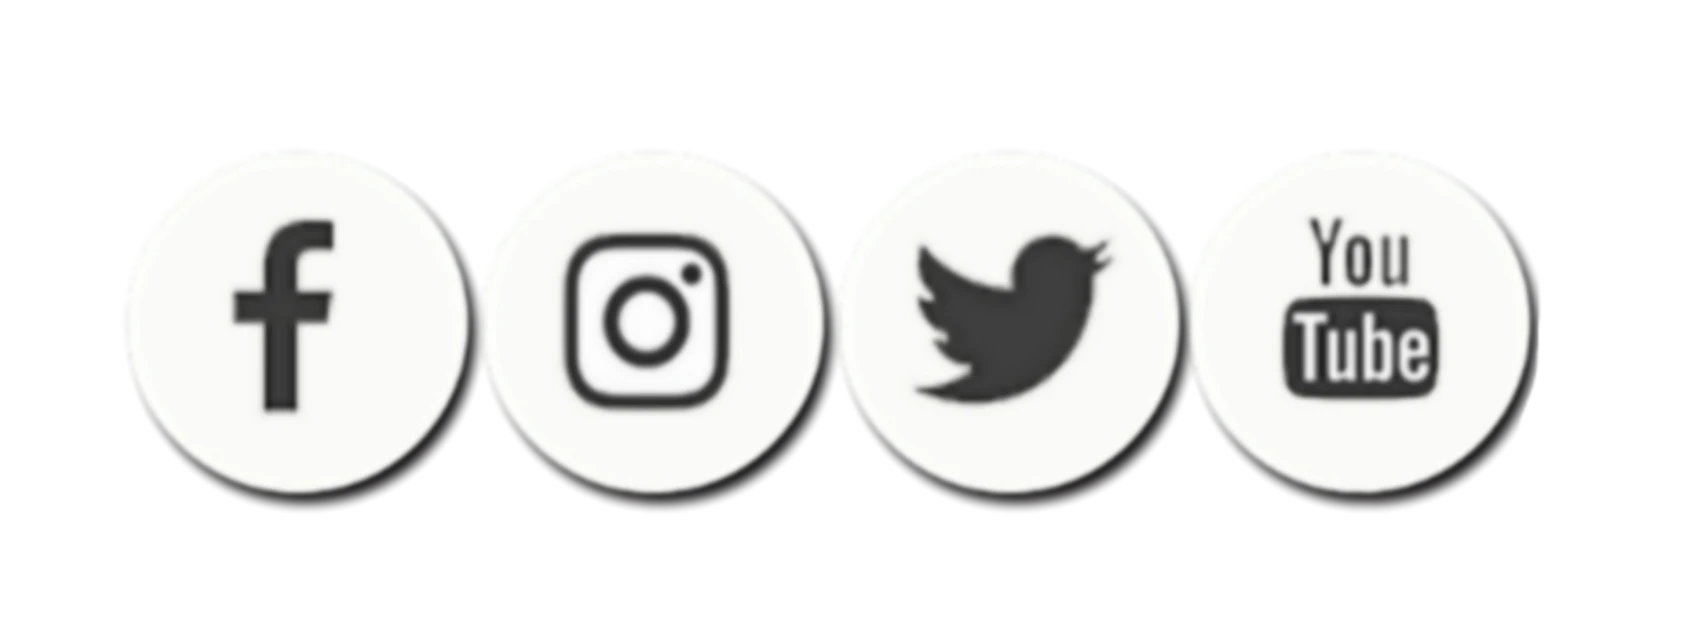 Facebook Instagram Youtube logo PNG image haute qualité